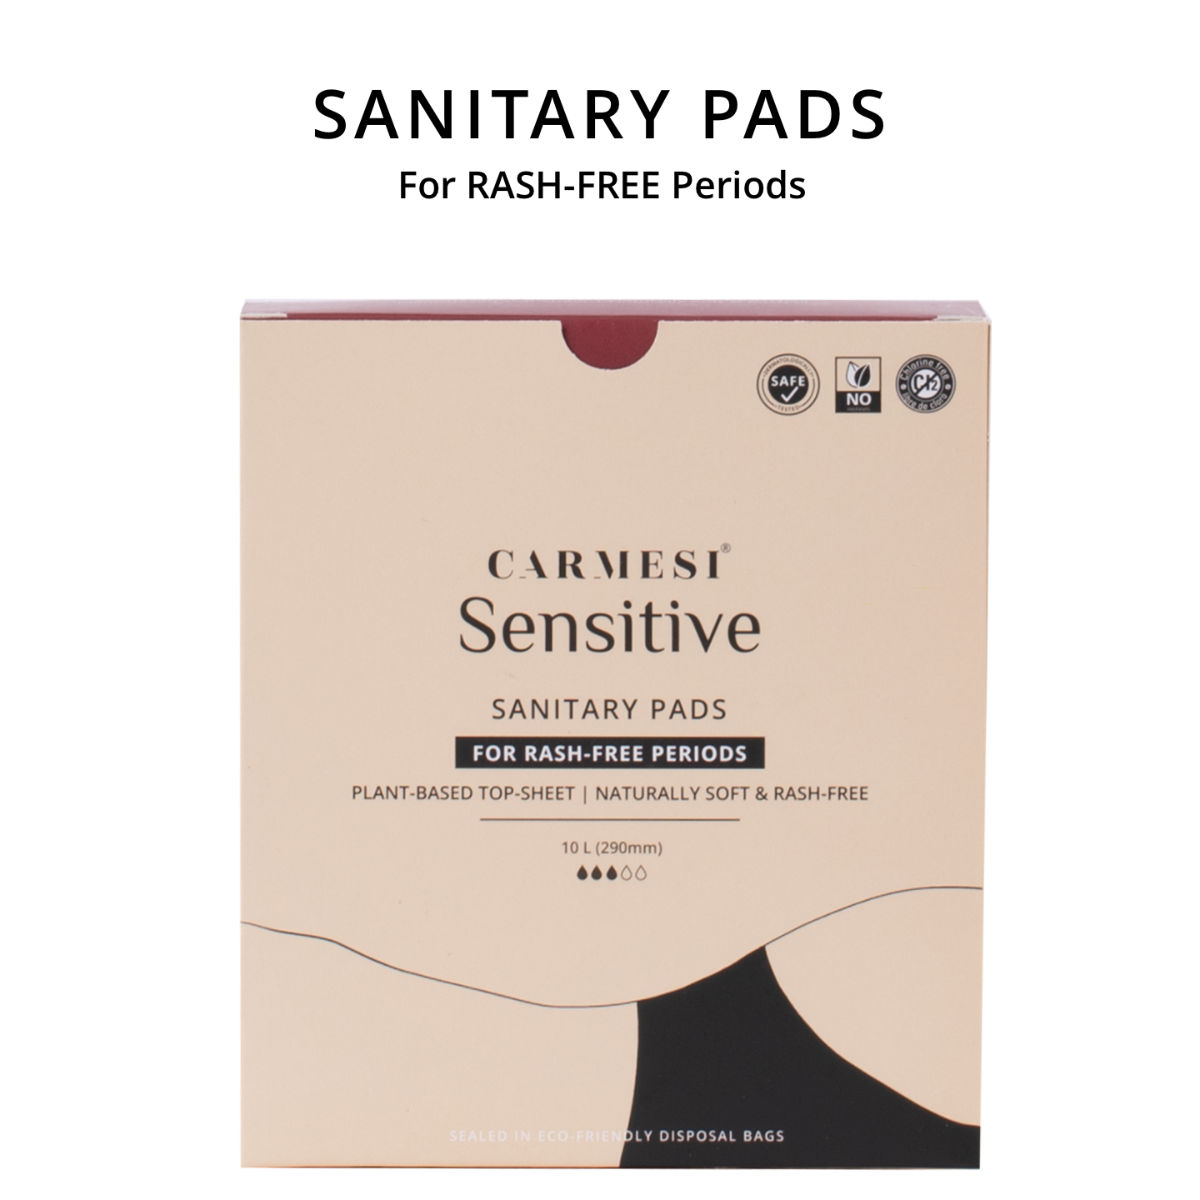 Carmesi Sensitive Sanitary Pads Large, 10 Count, Pack of 1 